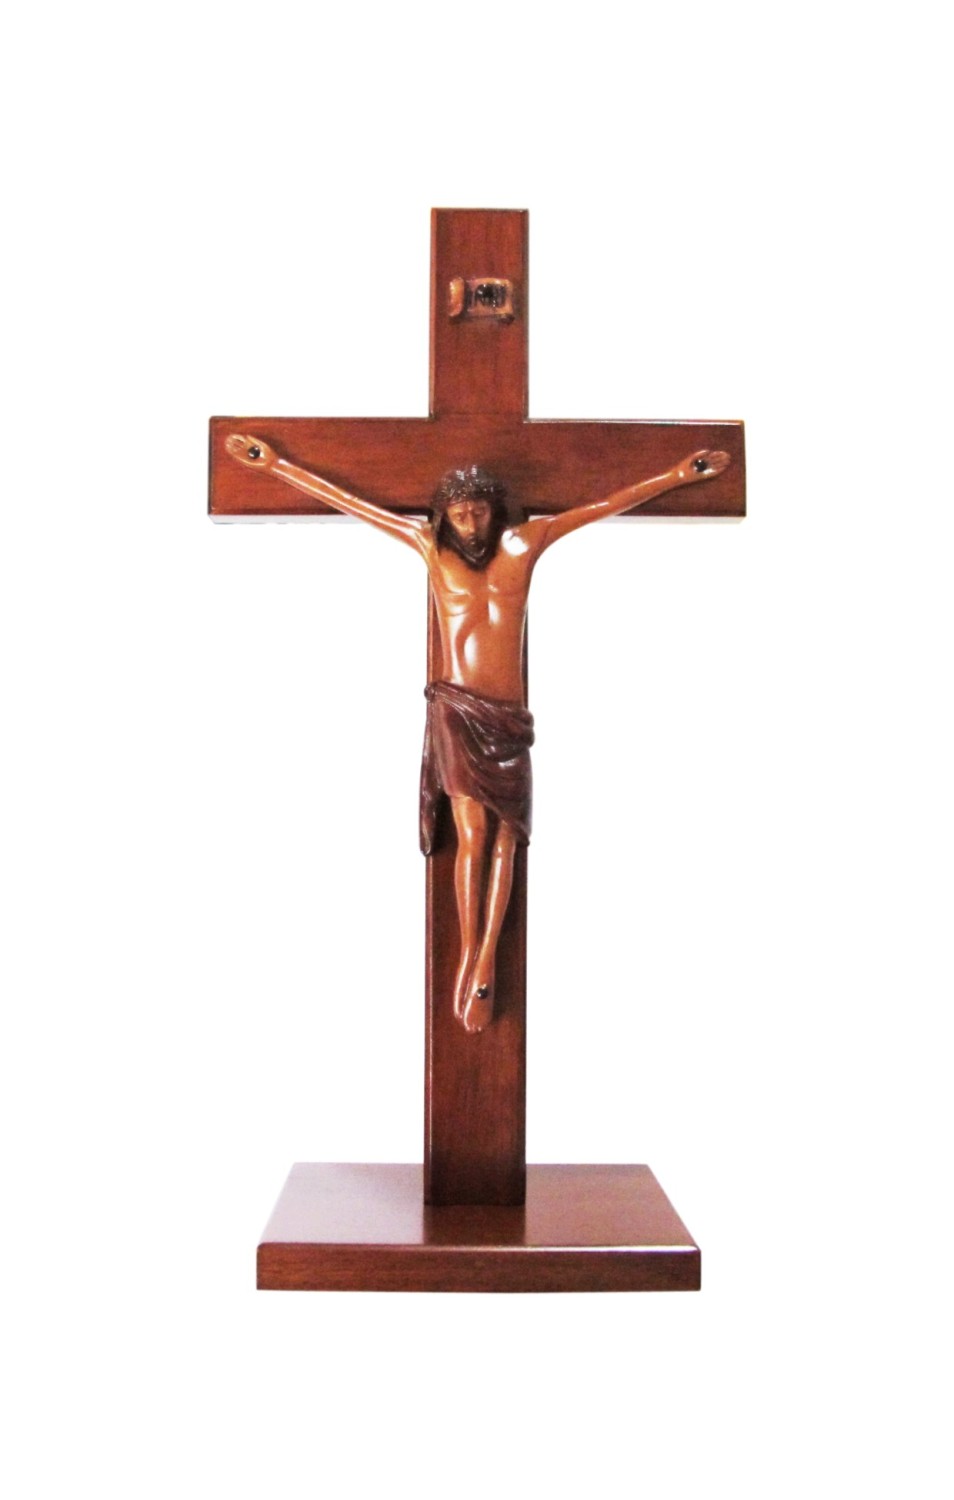 Christian large wood wooden Corpus standing Cross 30cm square base crucifix